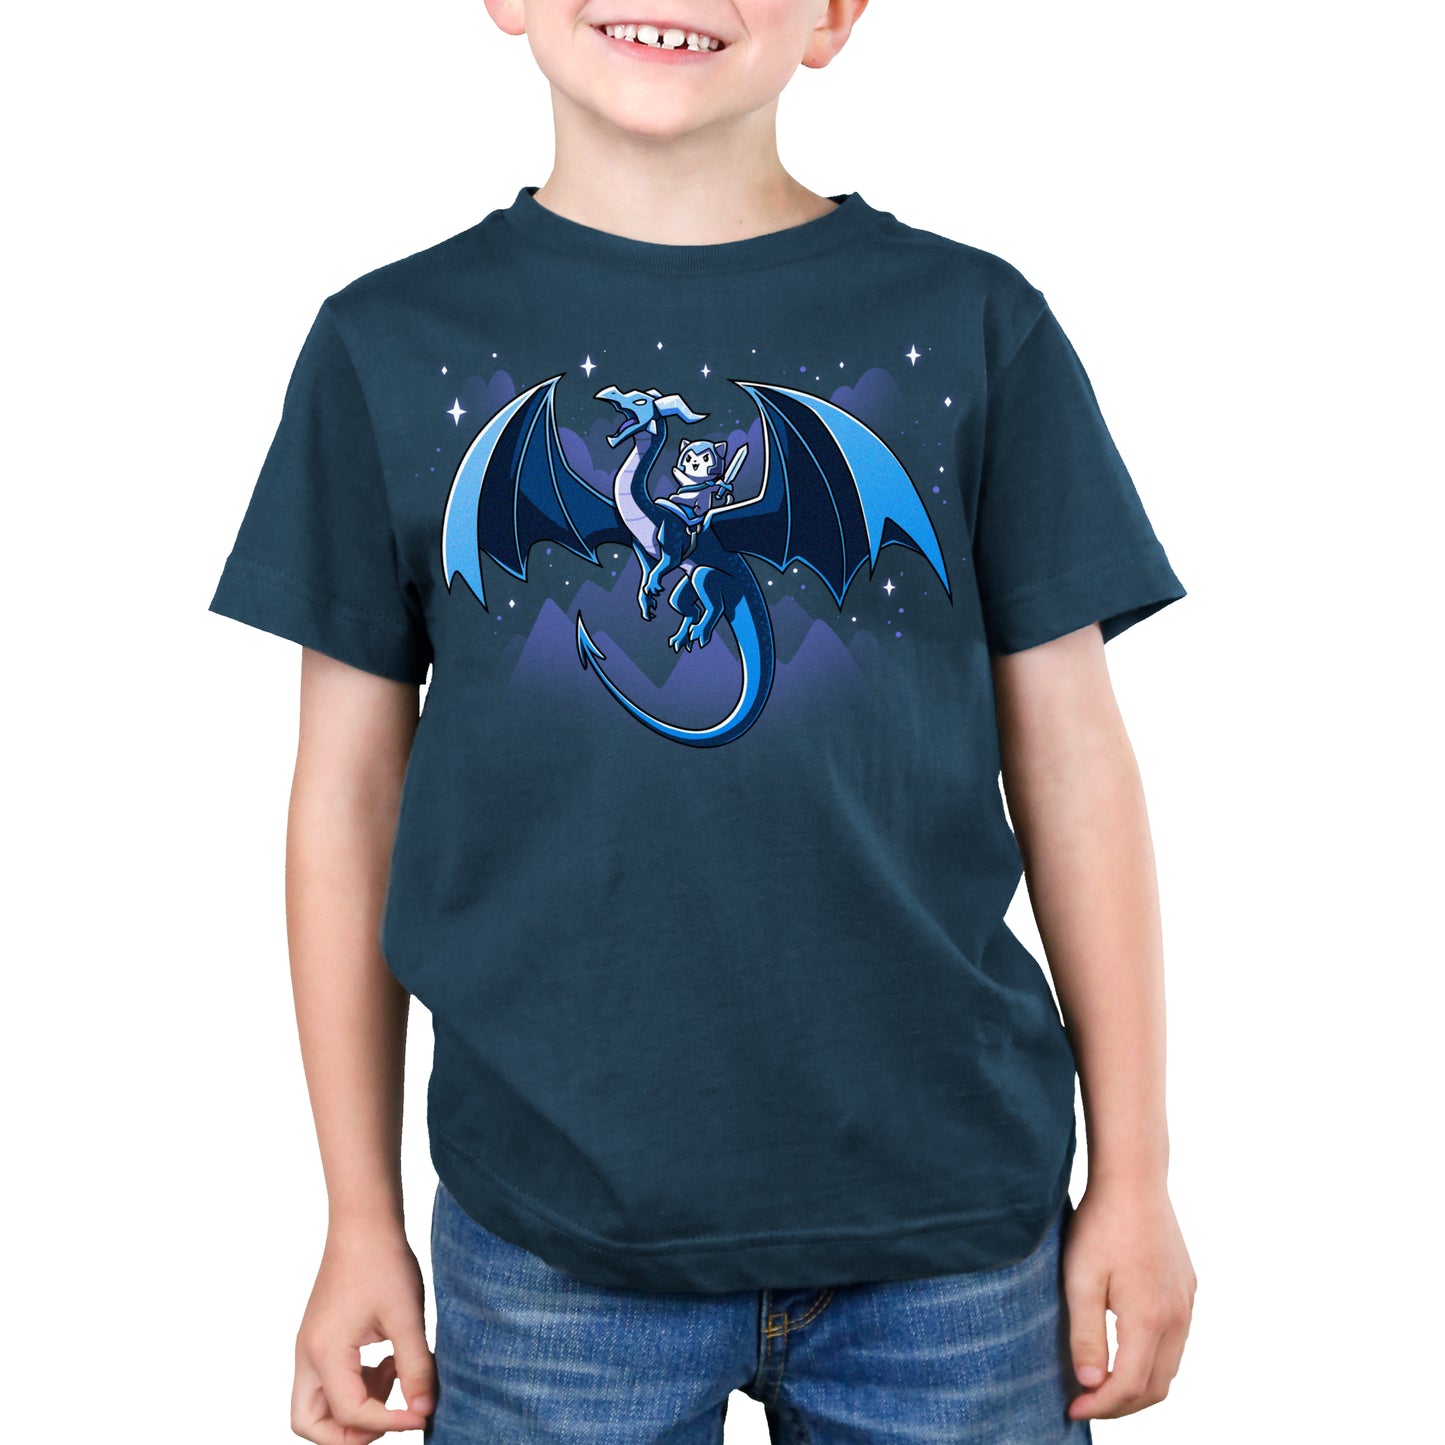 A young boy wearing a TeeTurtle Dragon Rider t-shirt in denim blue.